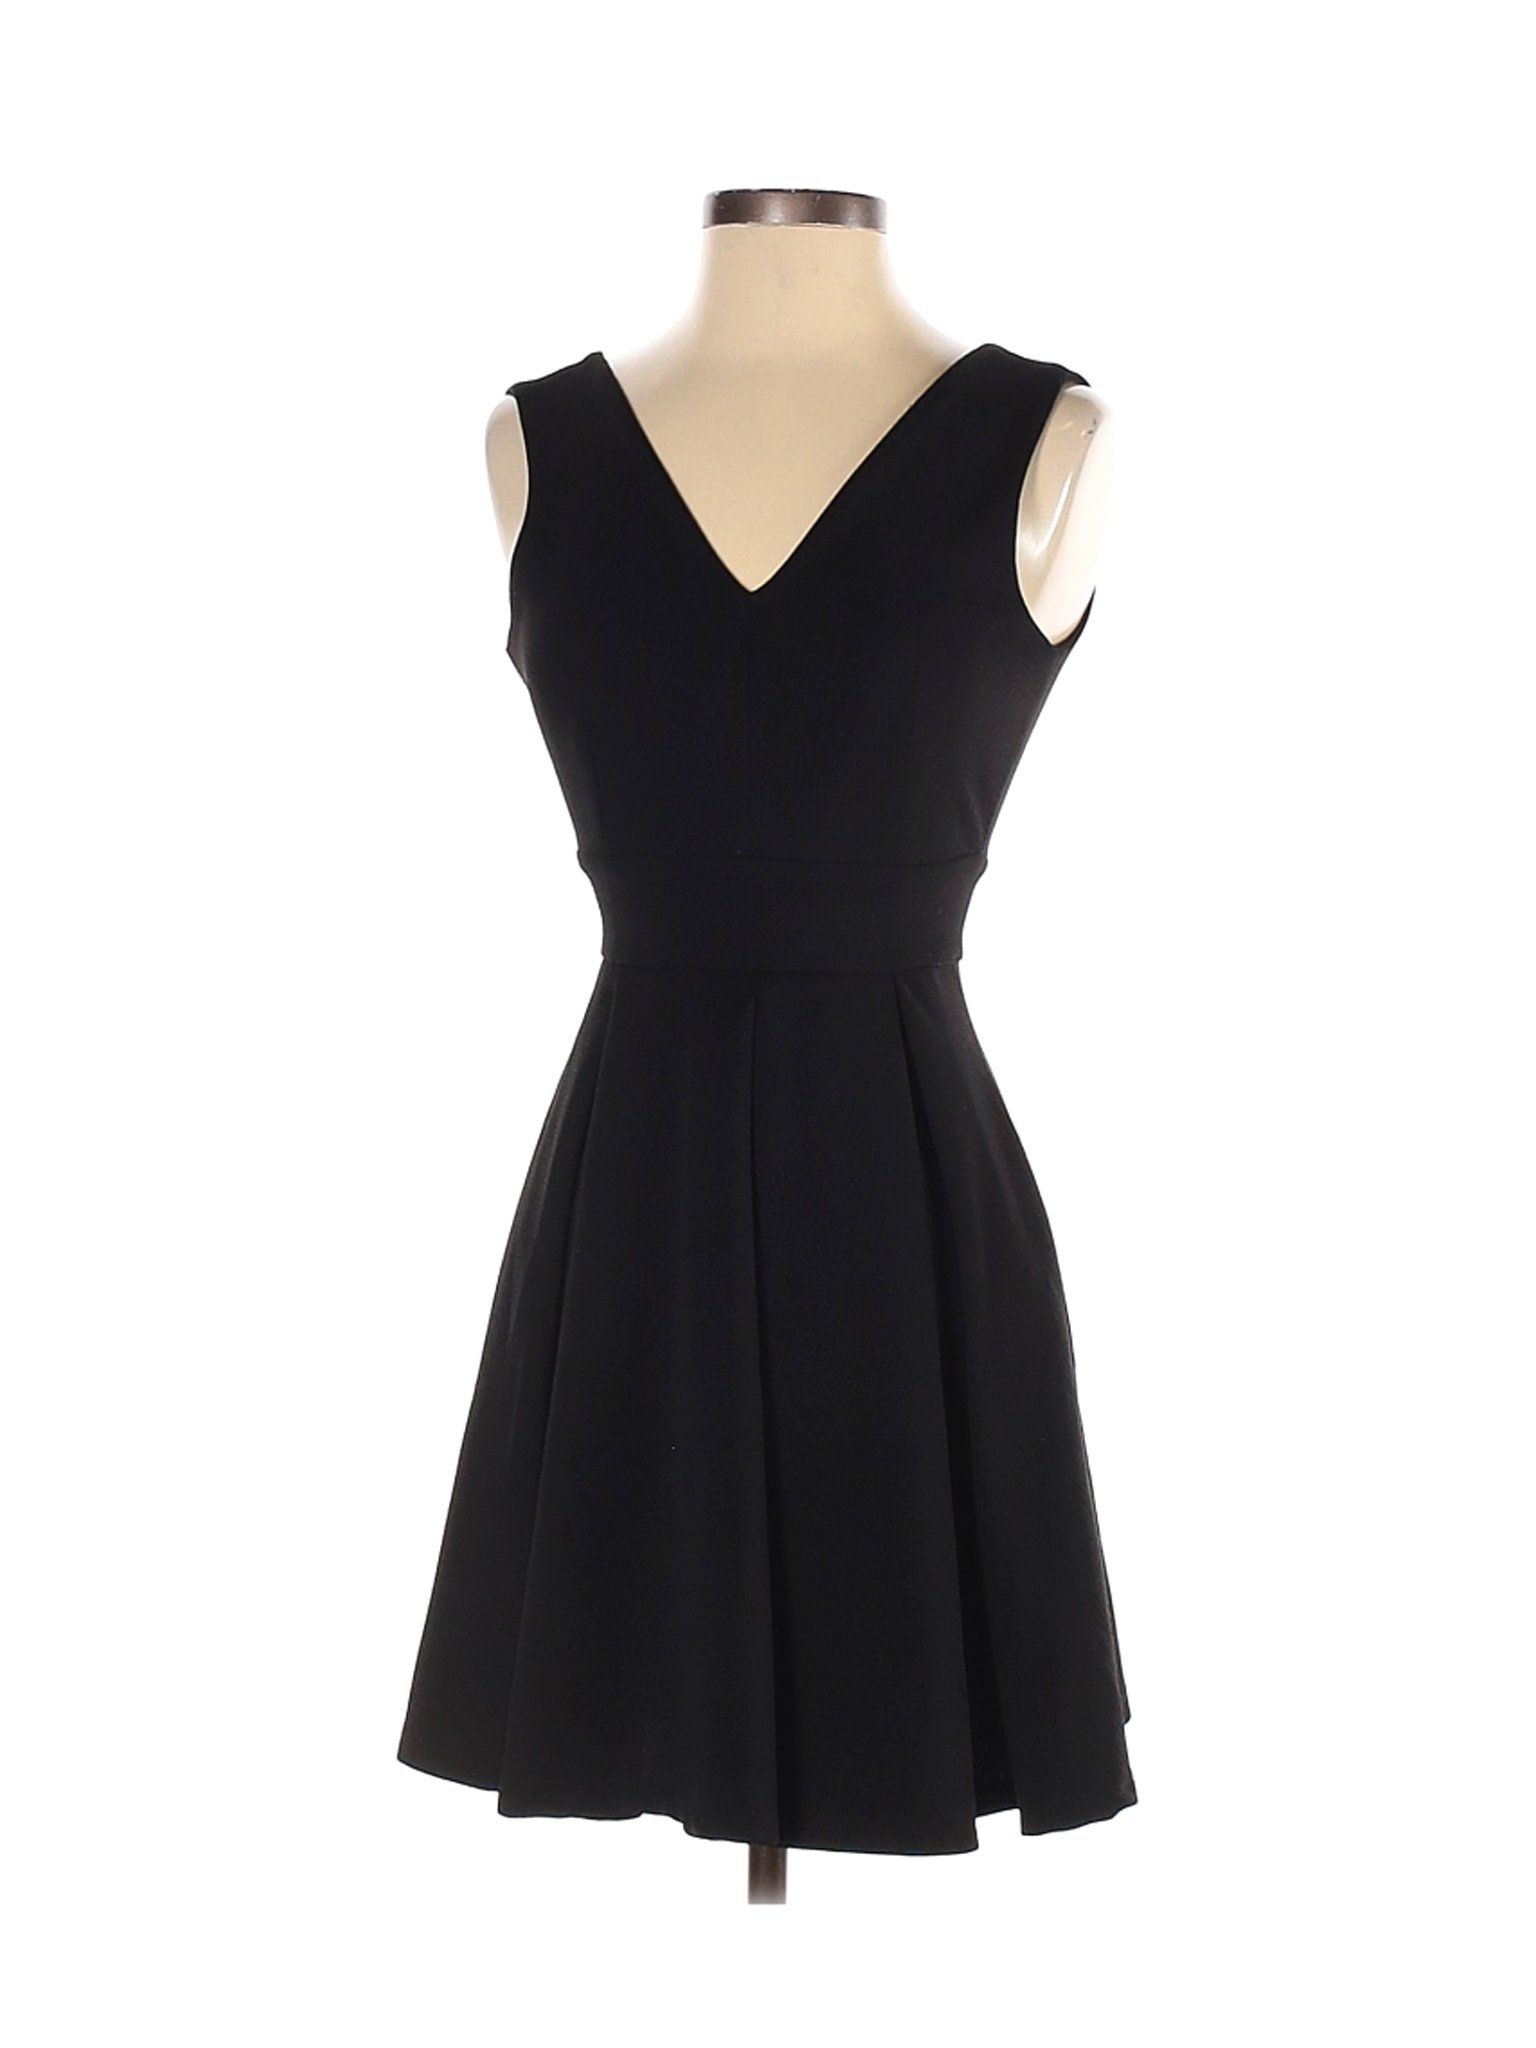 Haute Monde Women Black Casual Dress S | eBay